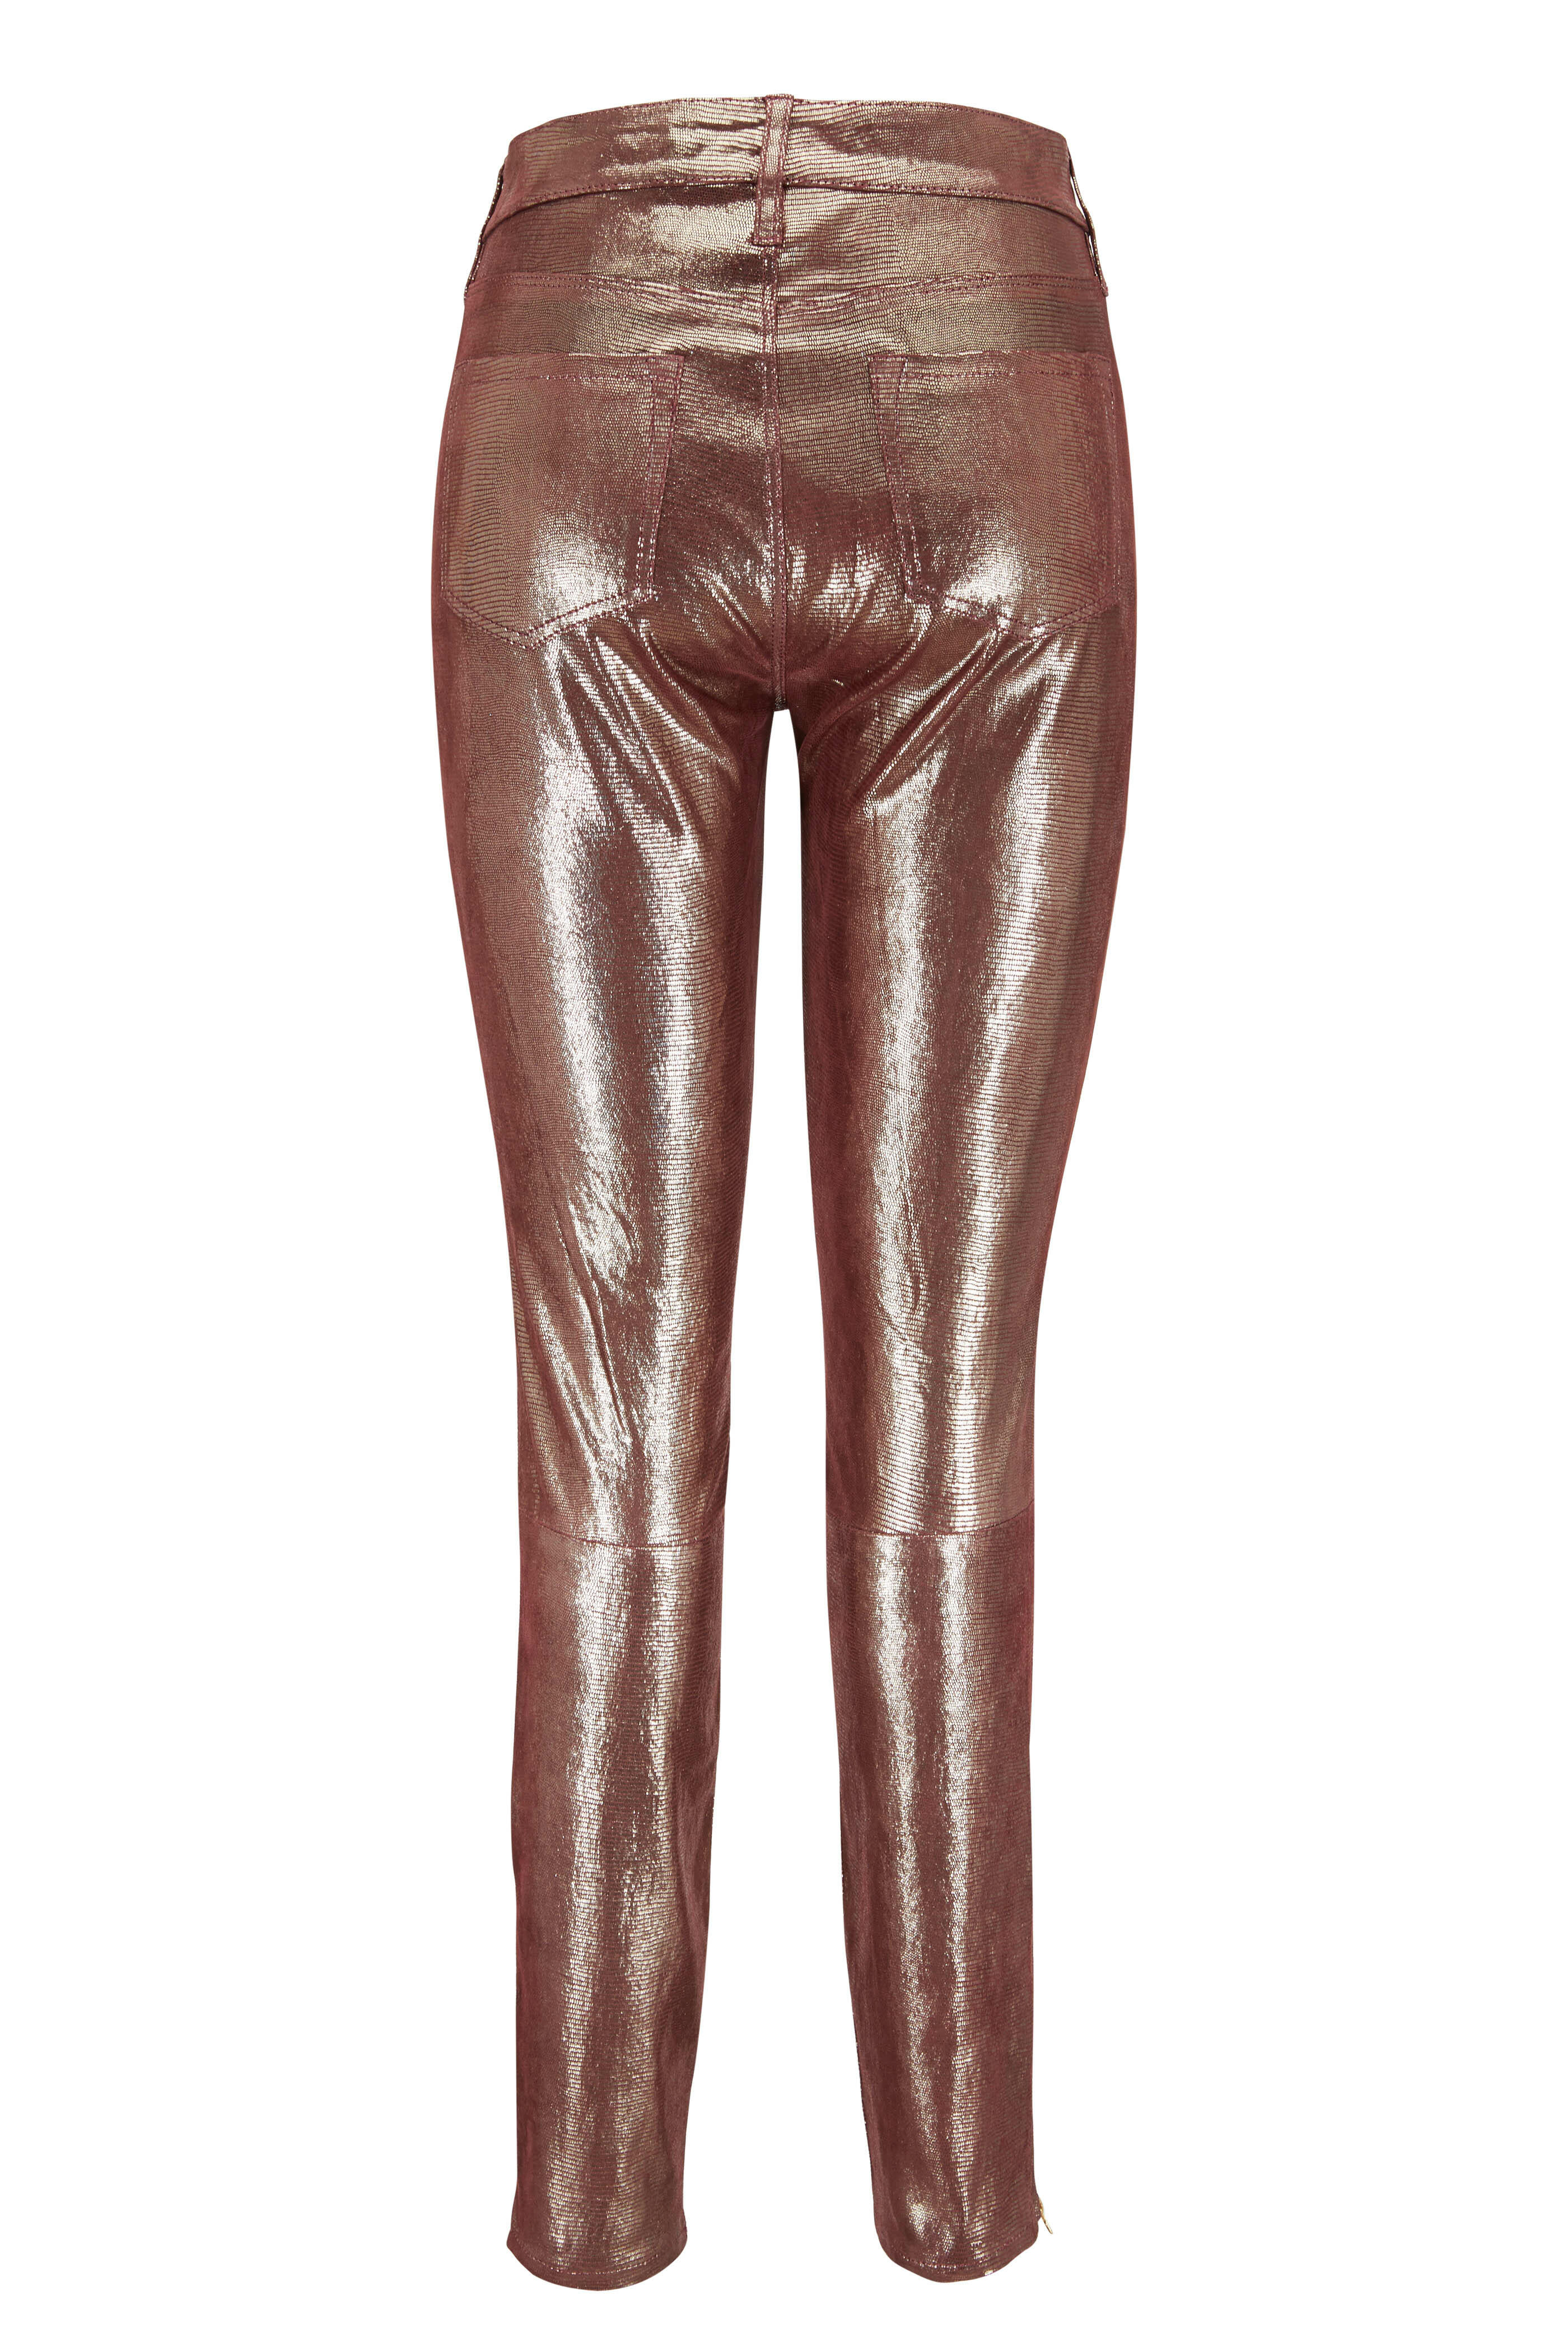 J Brand - Burgundy Foiled Leather Mid-Rise Skinny Jean